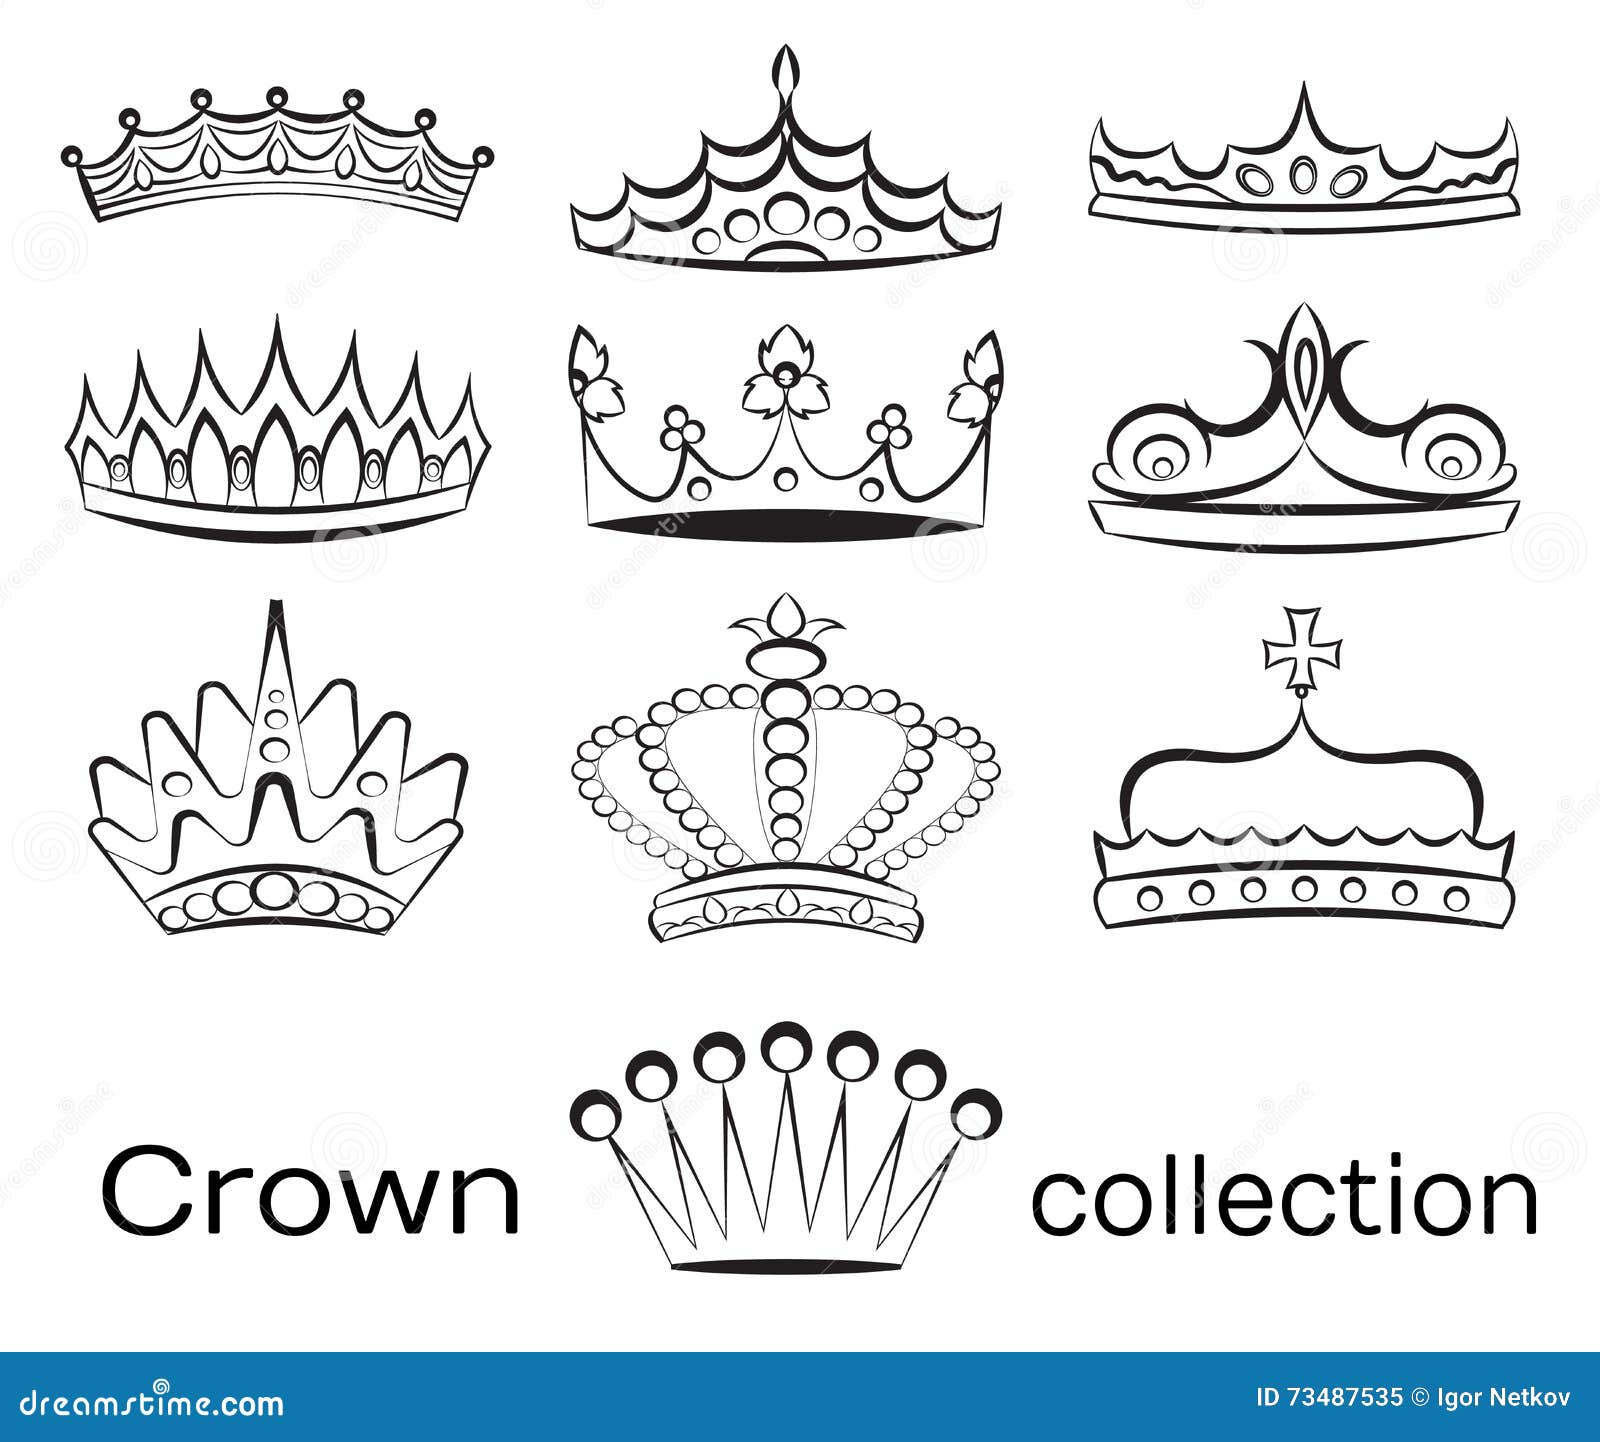 Crown collection. Тату корона. Корона тату вектор. Корона рисунок вектор. Корона арт.